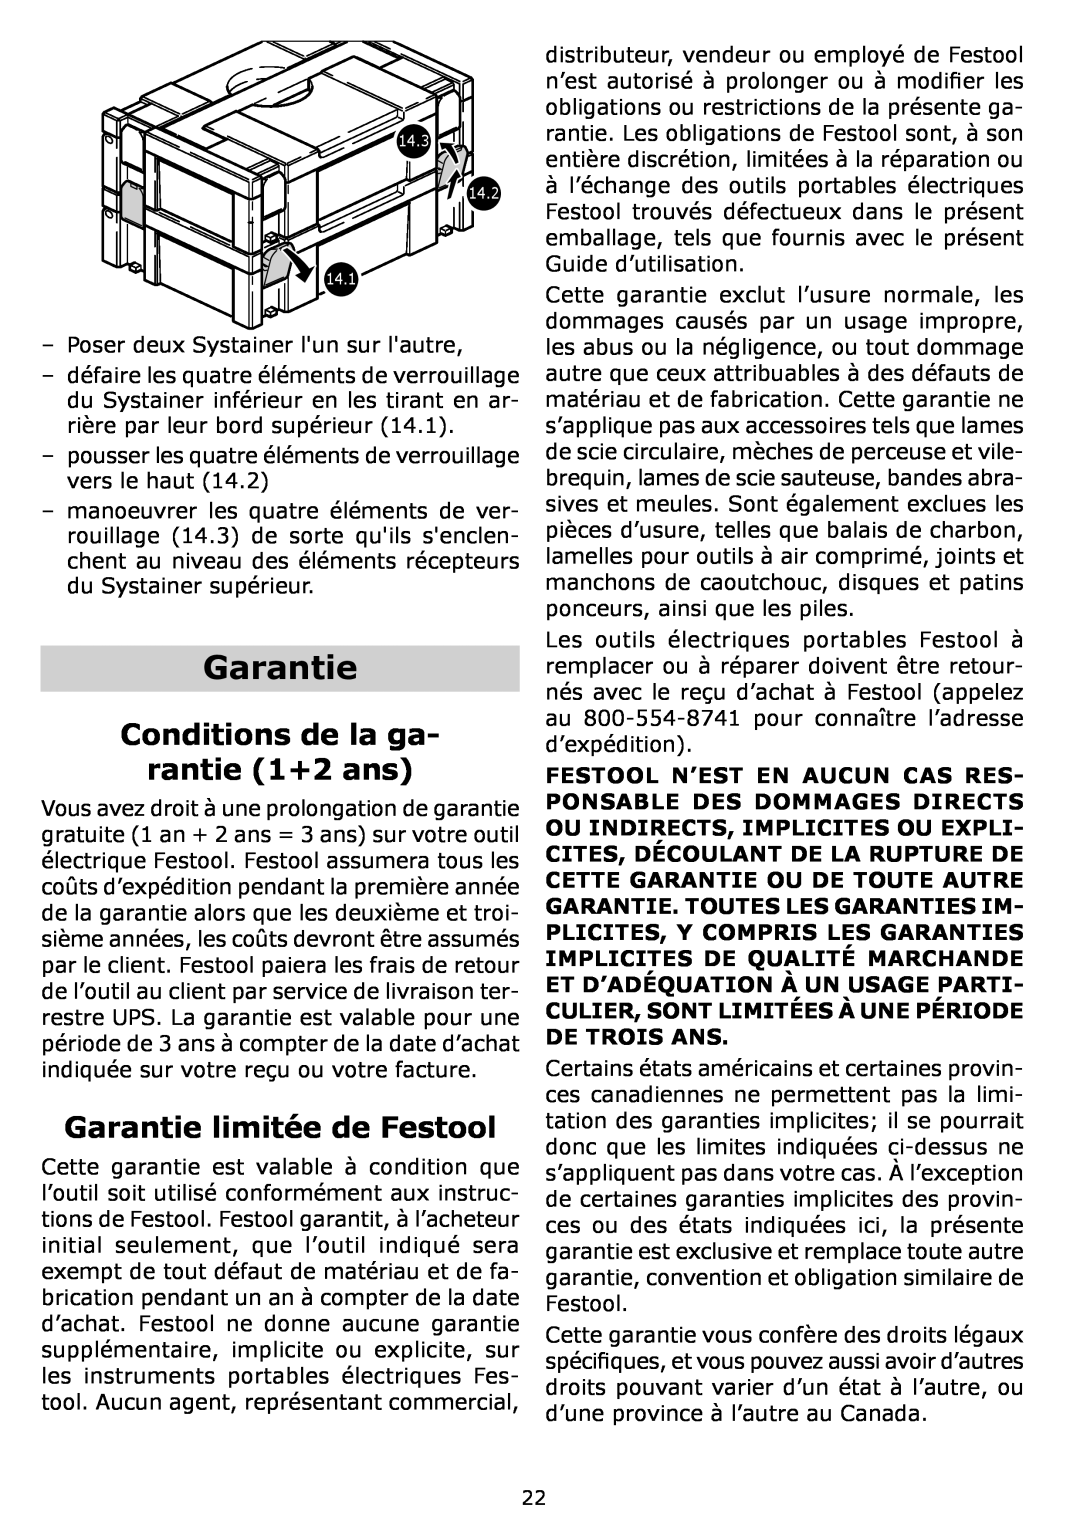 Festool OF 1400 EQ, PI574342, PN574342, PAC574342 Conditions de la ga, rantie 1+2 ans, Garantie limitée de Festool 